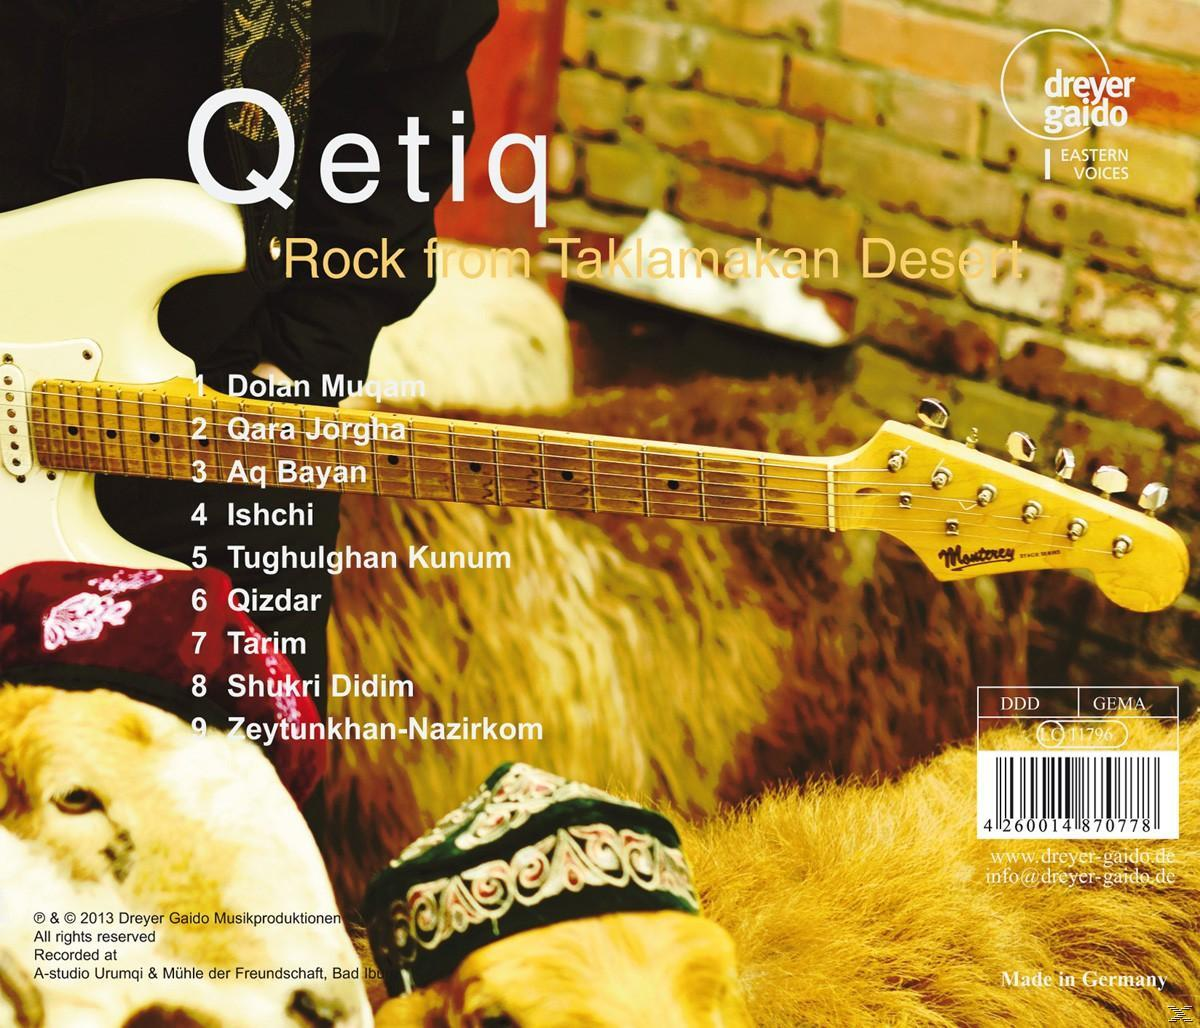 Qetiq-Rock Aus Qetiq Taklamakan-Wüste - - (CD) Der